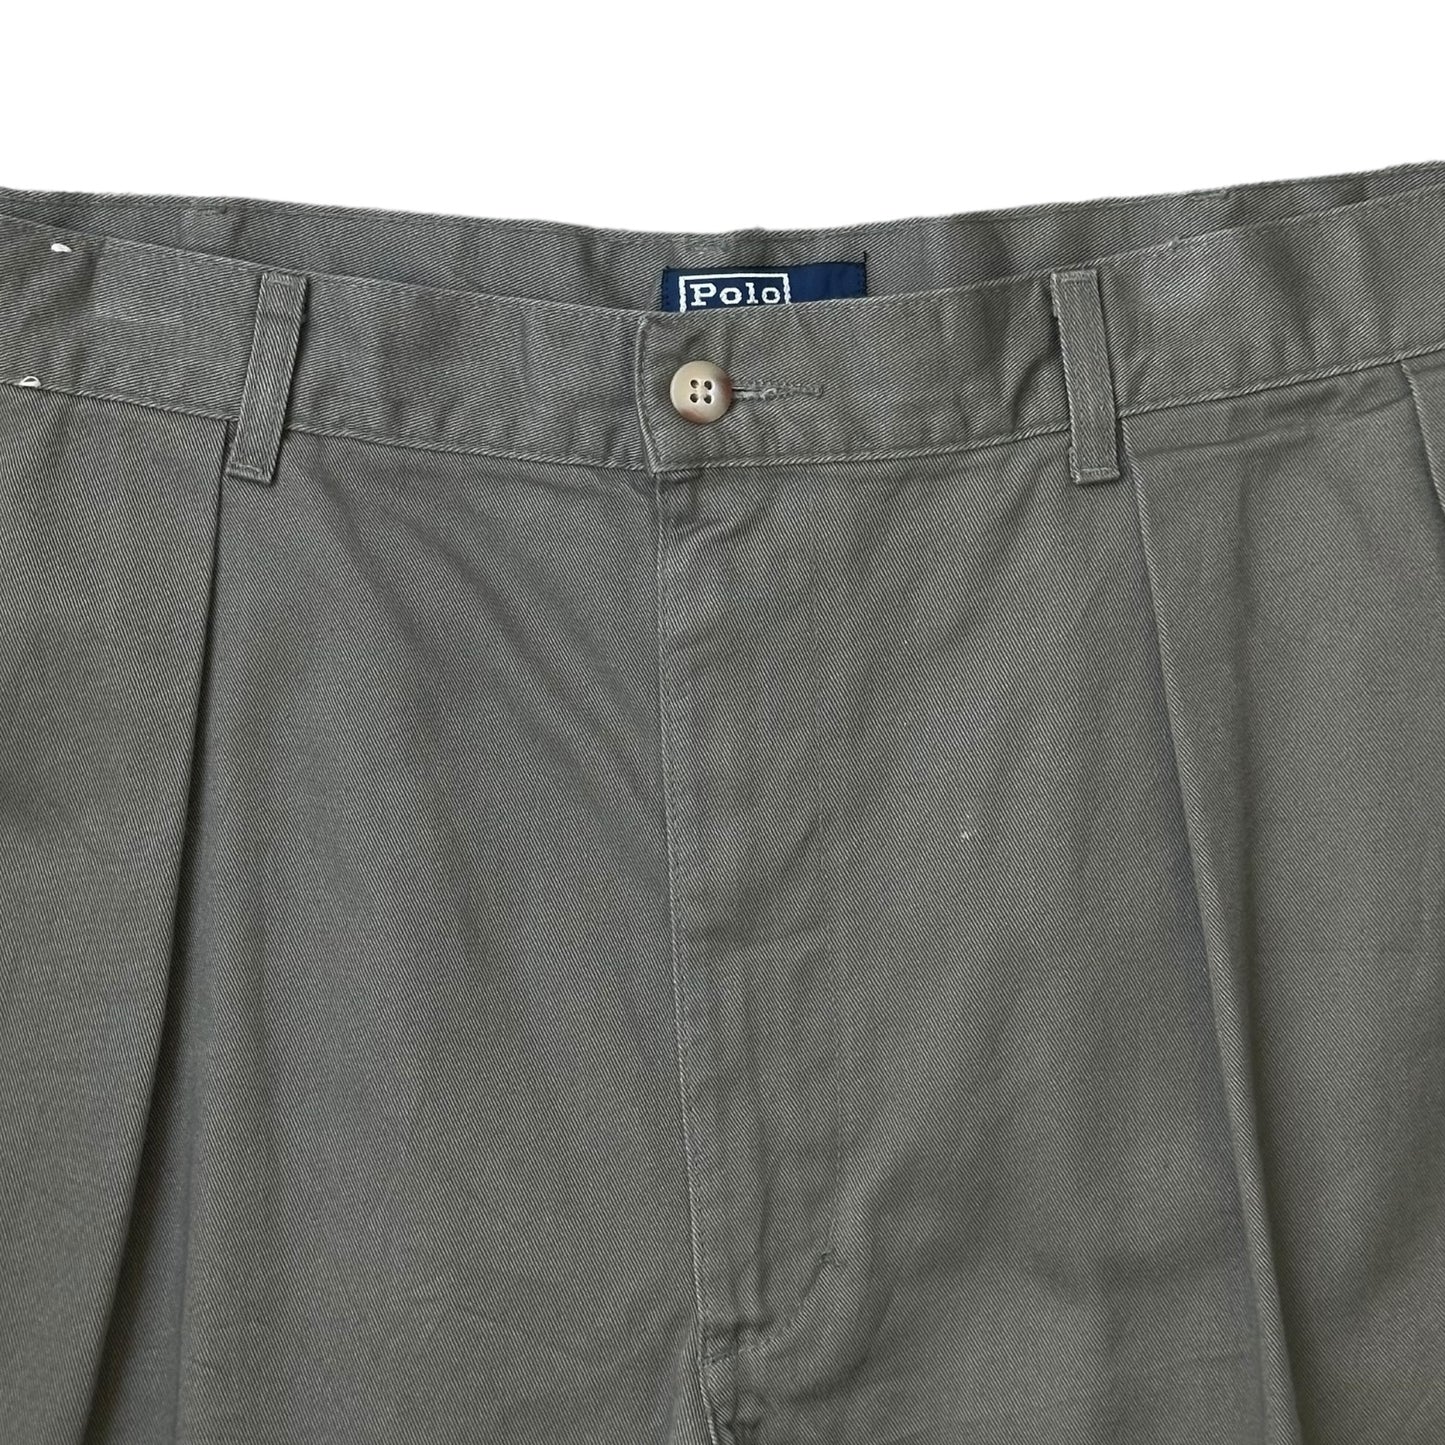 Ralph Lauren Polo Chino Shorts